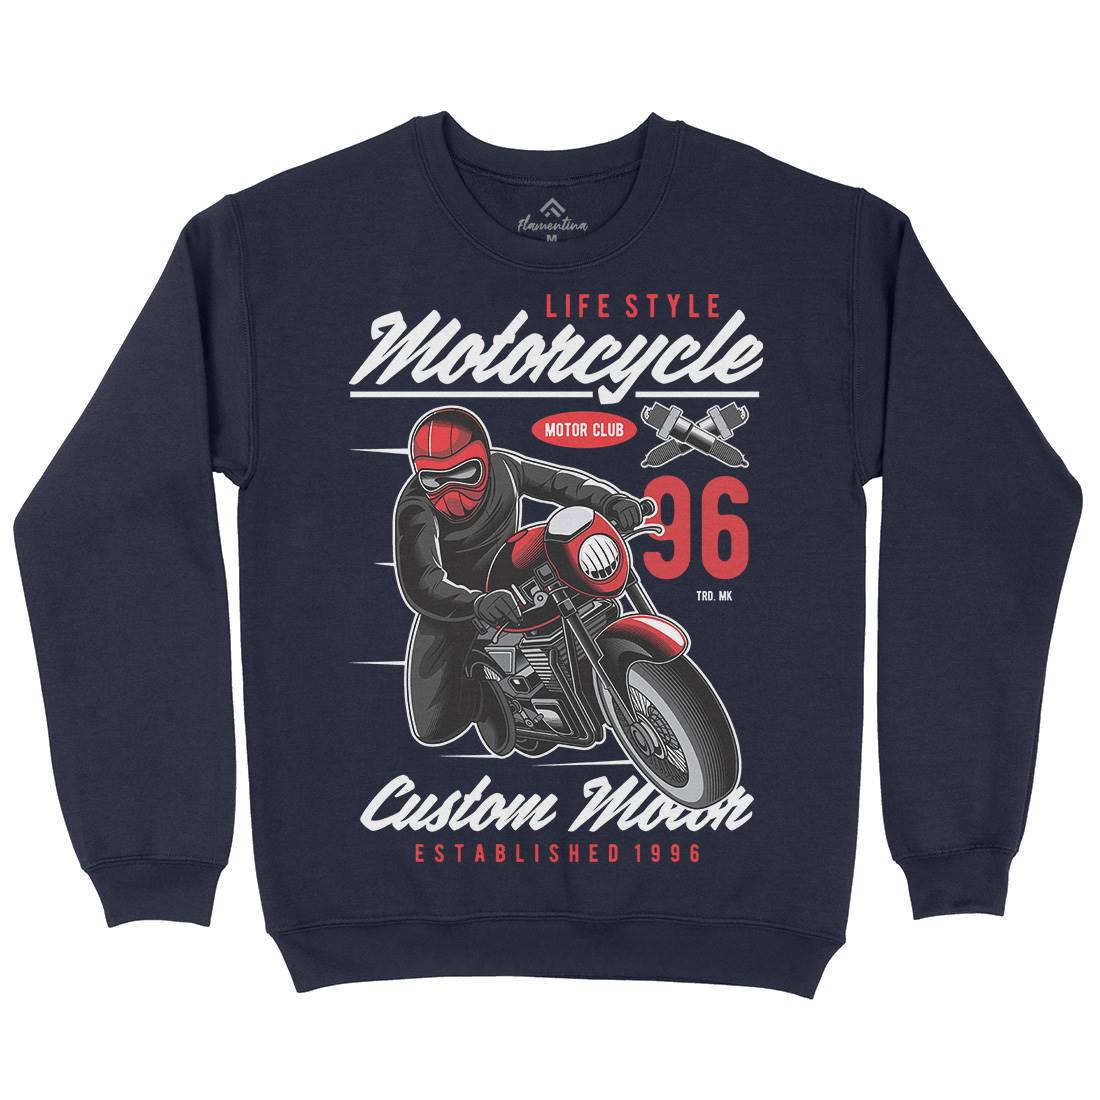 Lifestyle Kids Crew Neck Sweatshirt Motorcycles C399